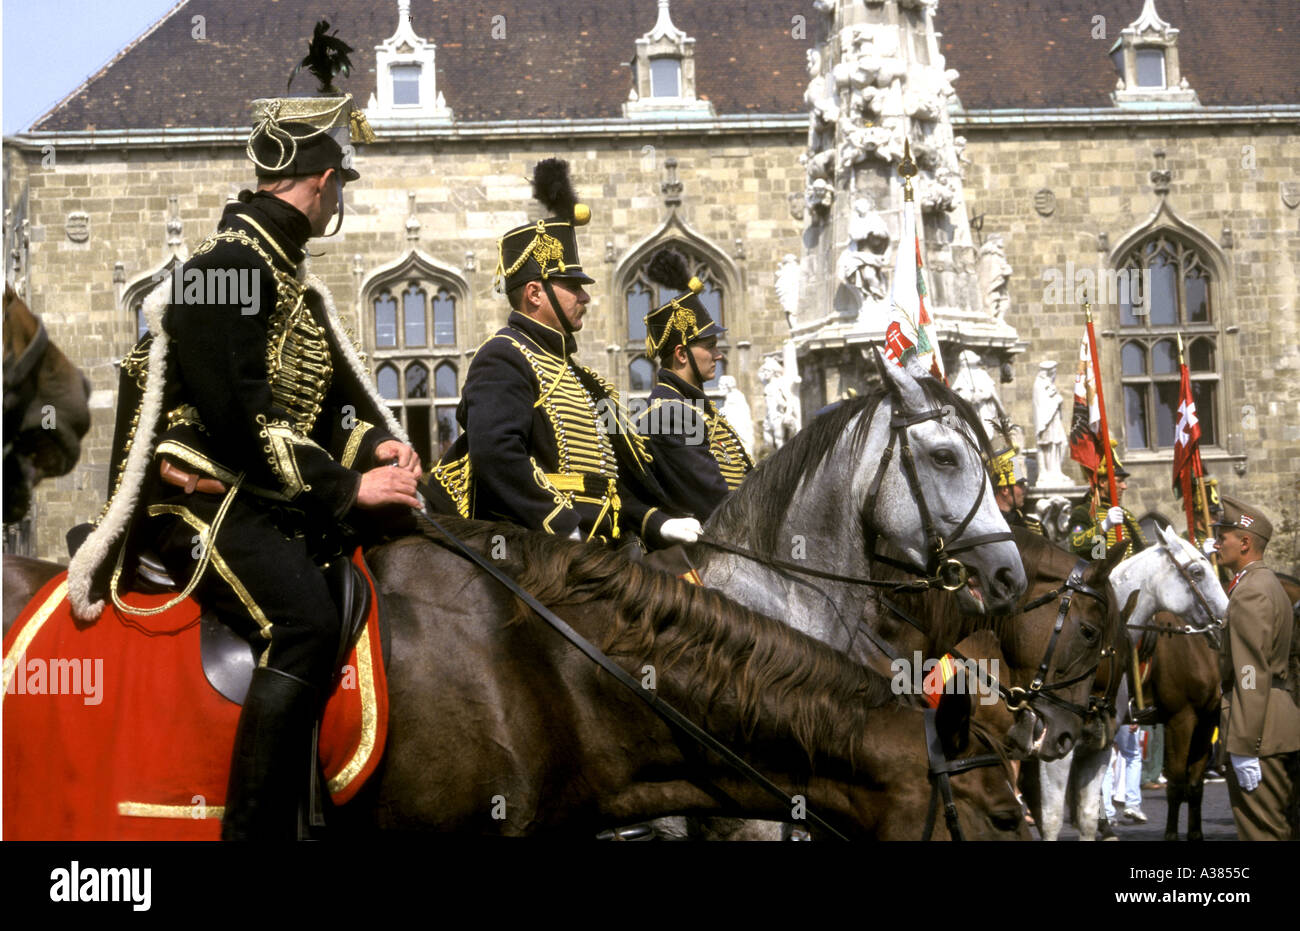 Hussars on horseback in Budapest Hungary military performance Stock Photo